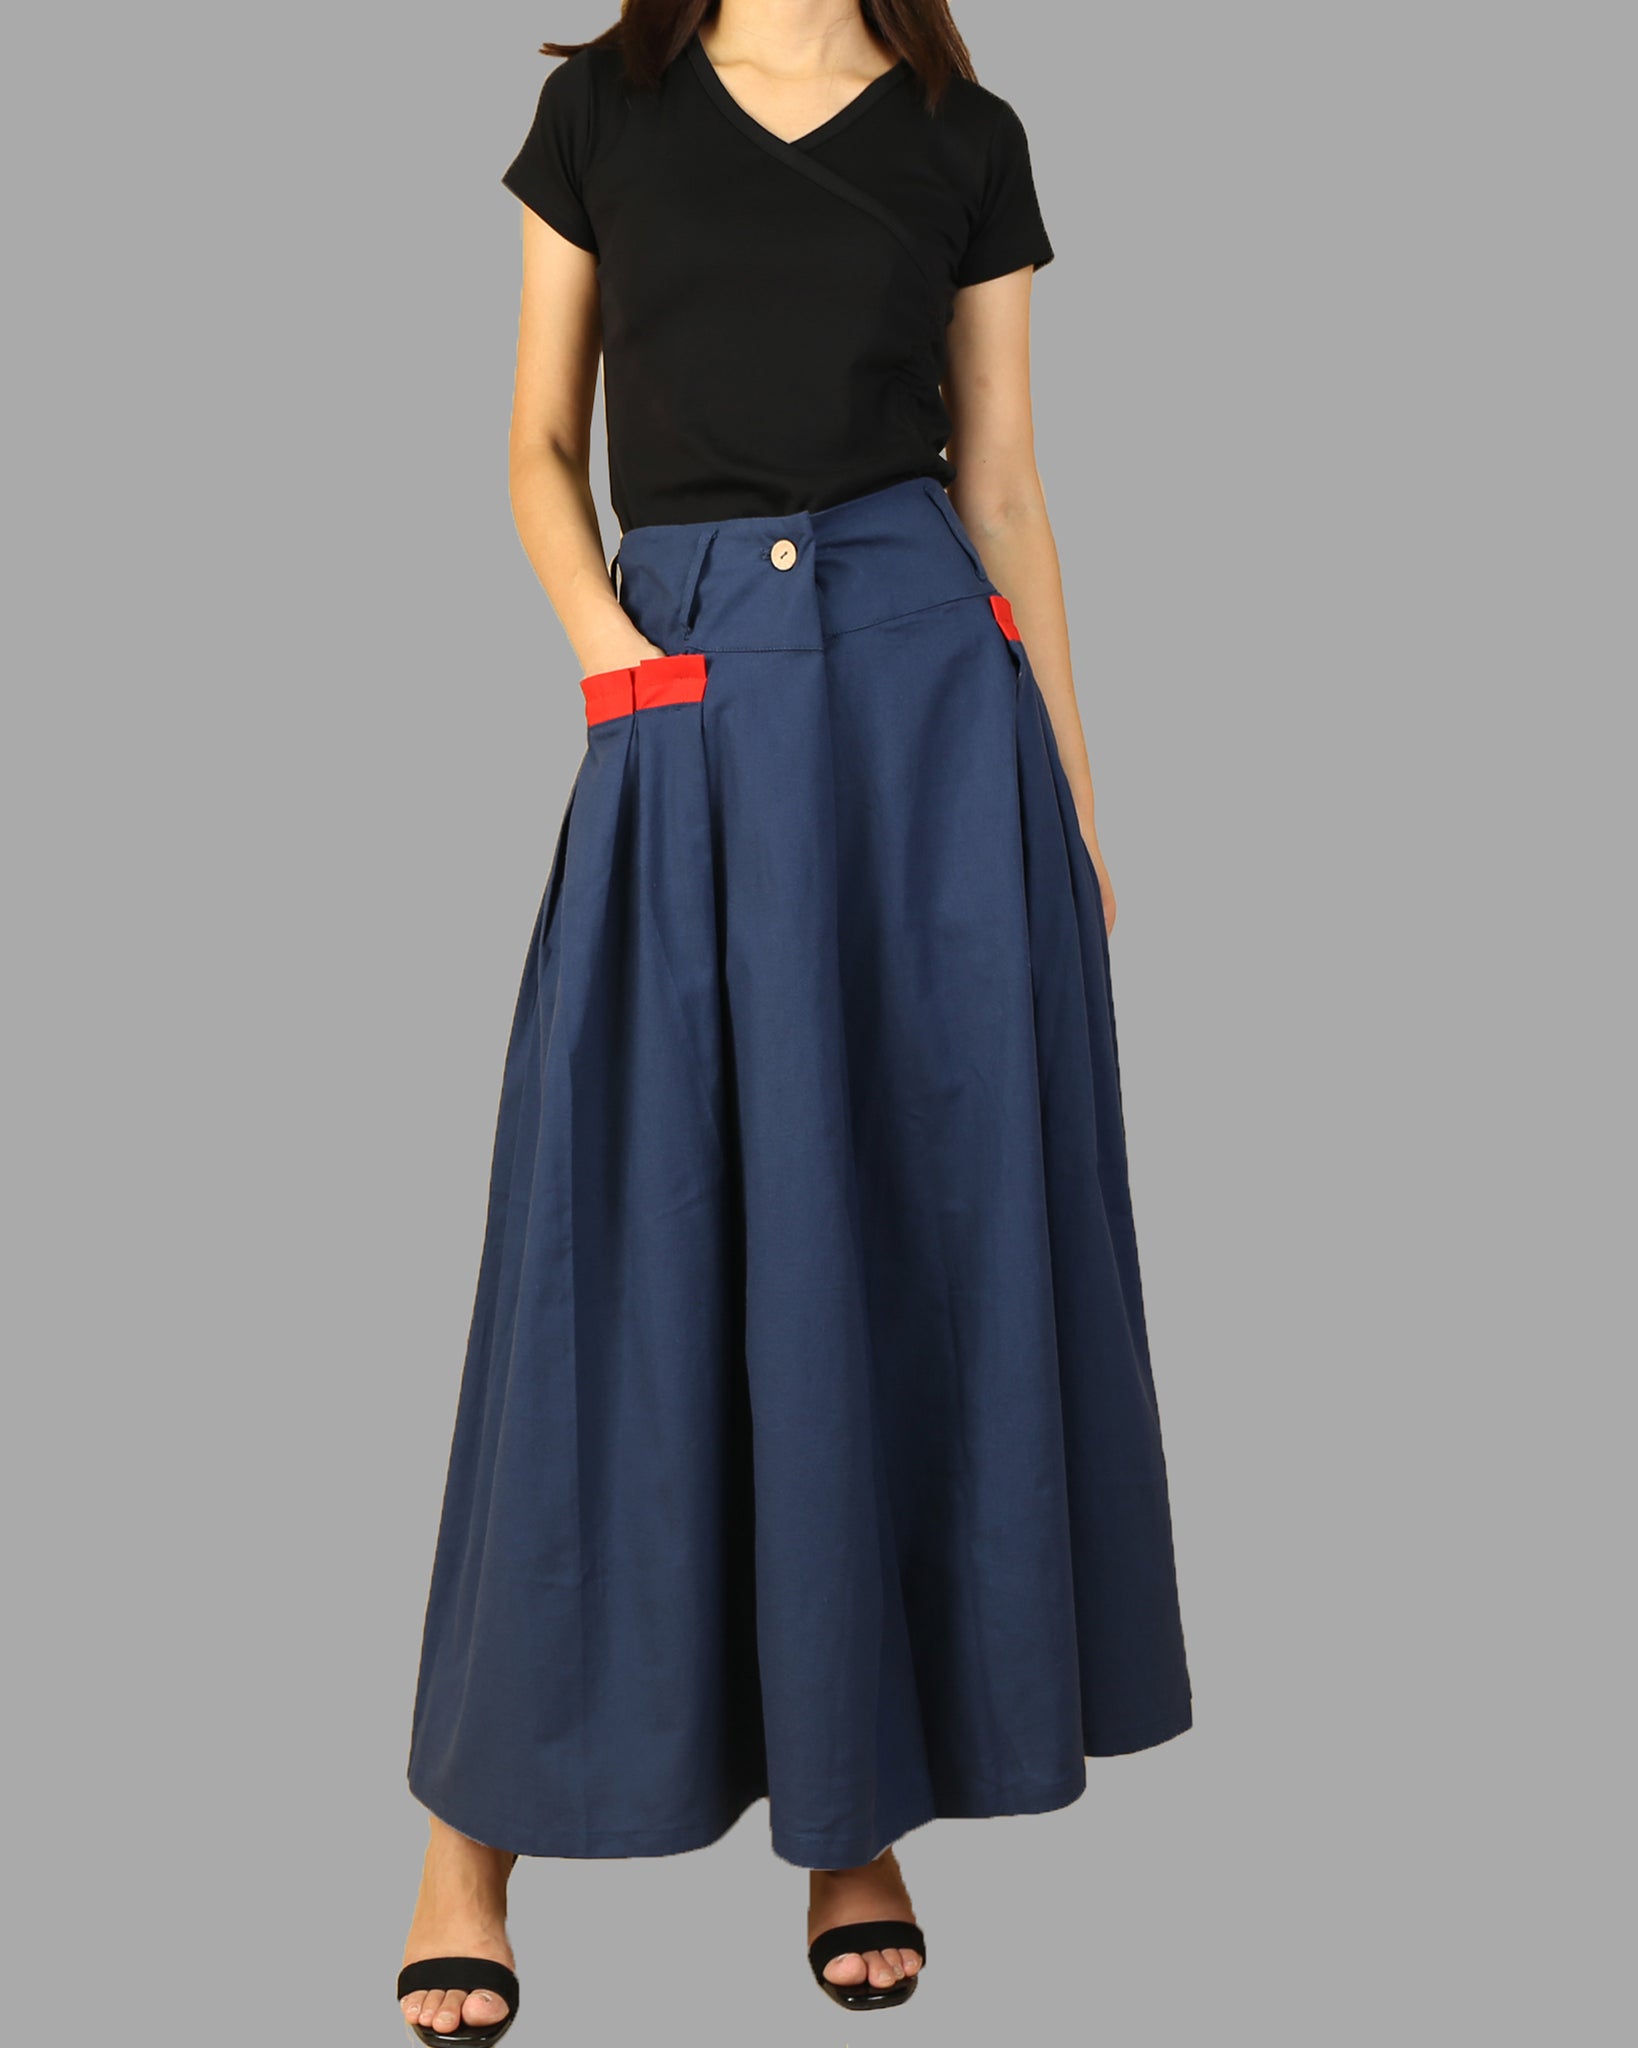 Women's skirt with pockets/ linen Skirt/long skirt/A-line skirt